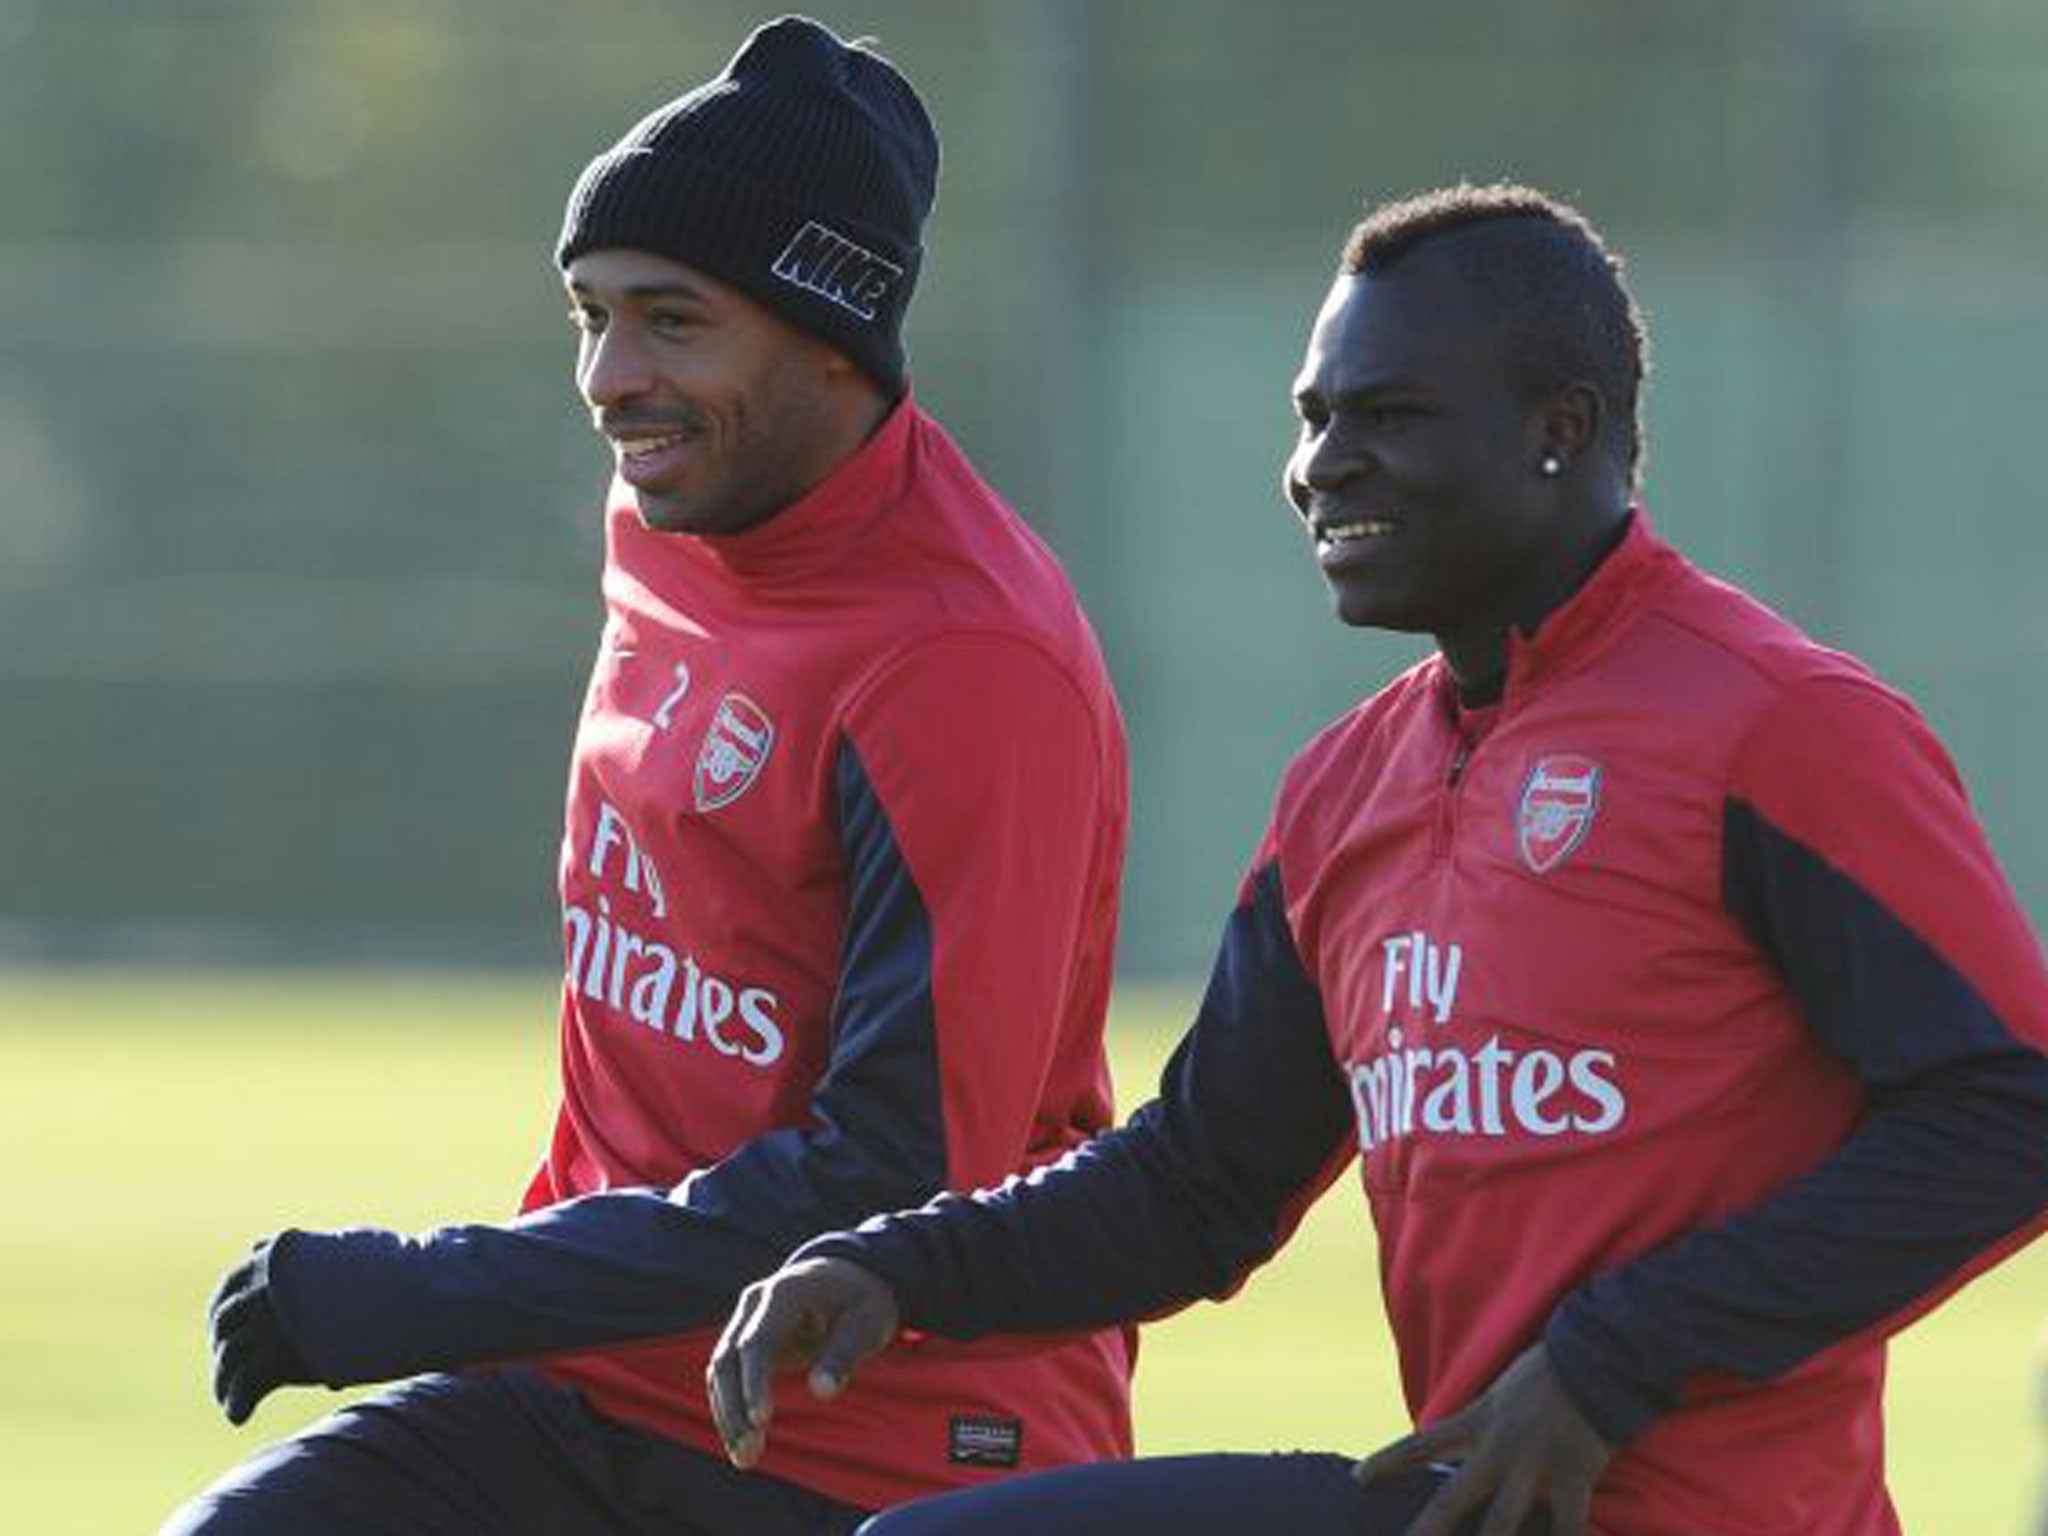 Thierry Henry trains alongside Emmanuel Frimpong